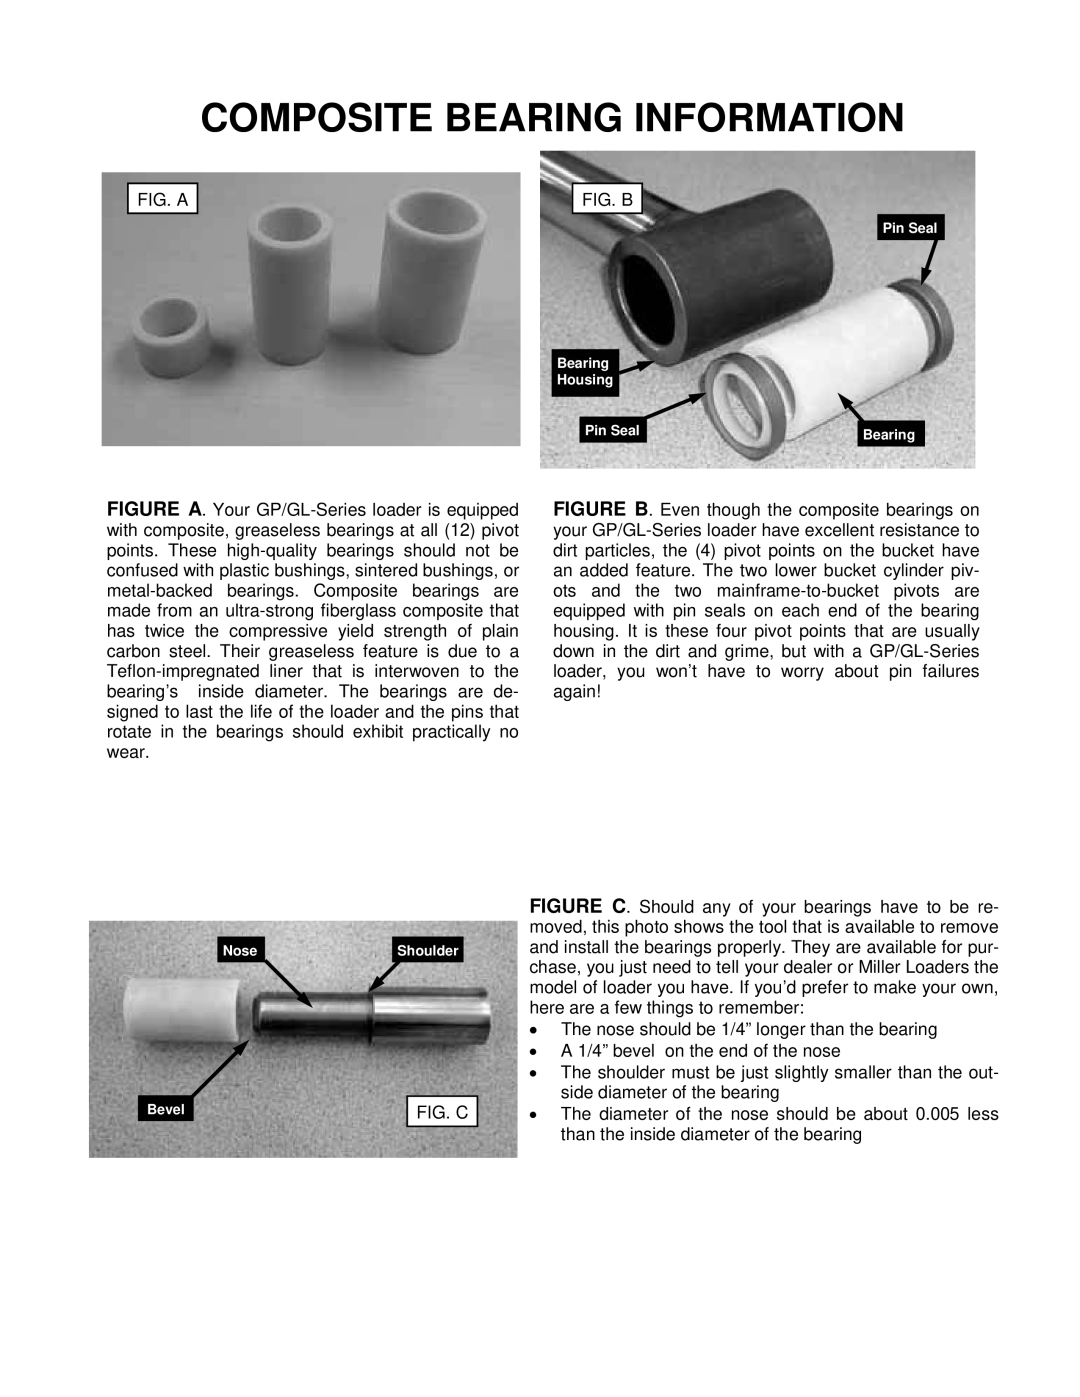 Miller Electric GP30 owner manual Composite Bearing Information, Fig. C 